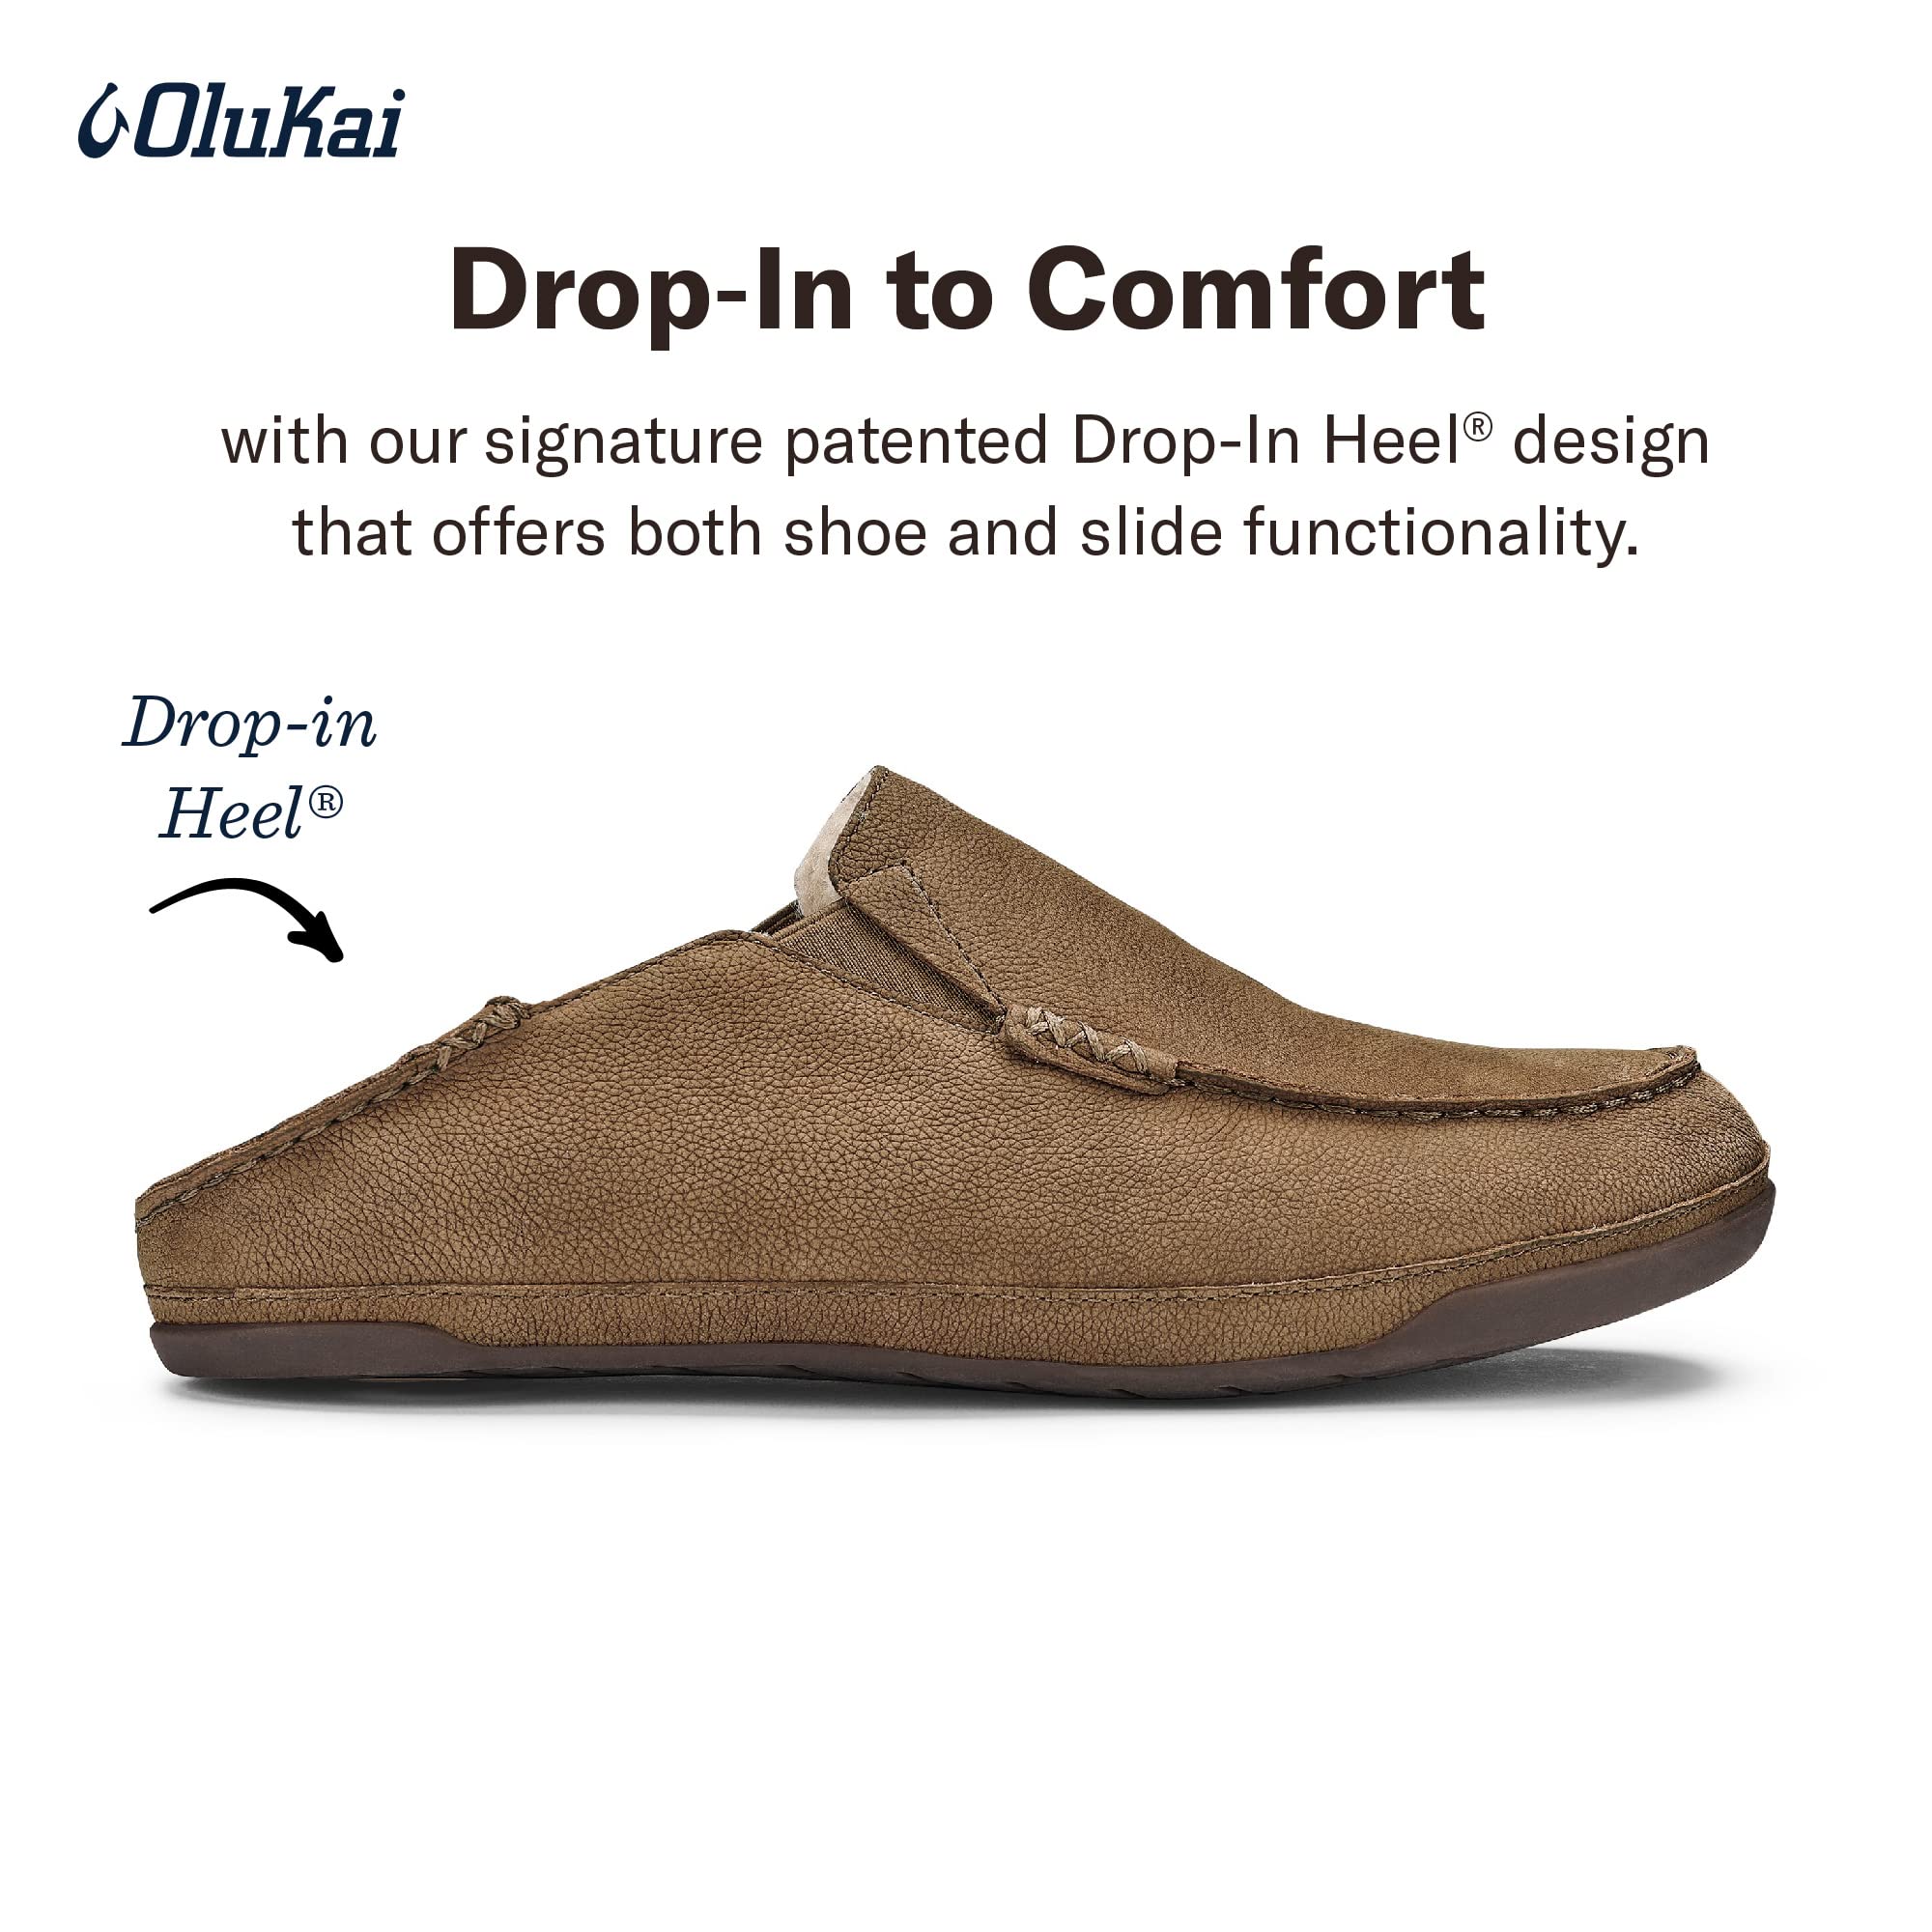 OLUKAI Kipuka Hulu Men's Leather Slippers, Premium Nubuck Leather Slip On Shoes, Shearling Lining & Gel Insert, Drop-In Heel Design